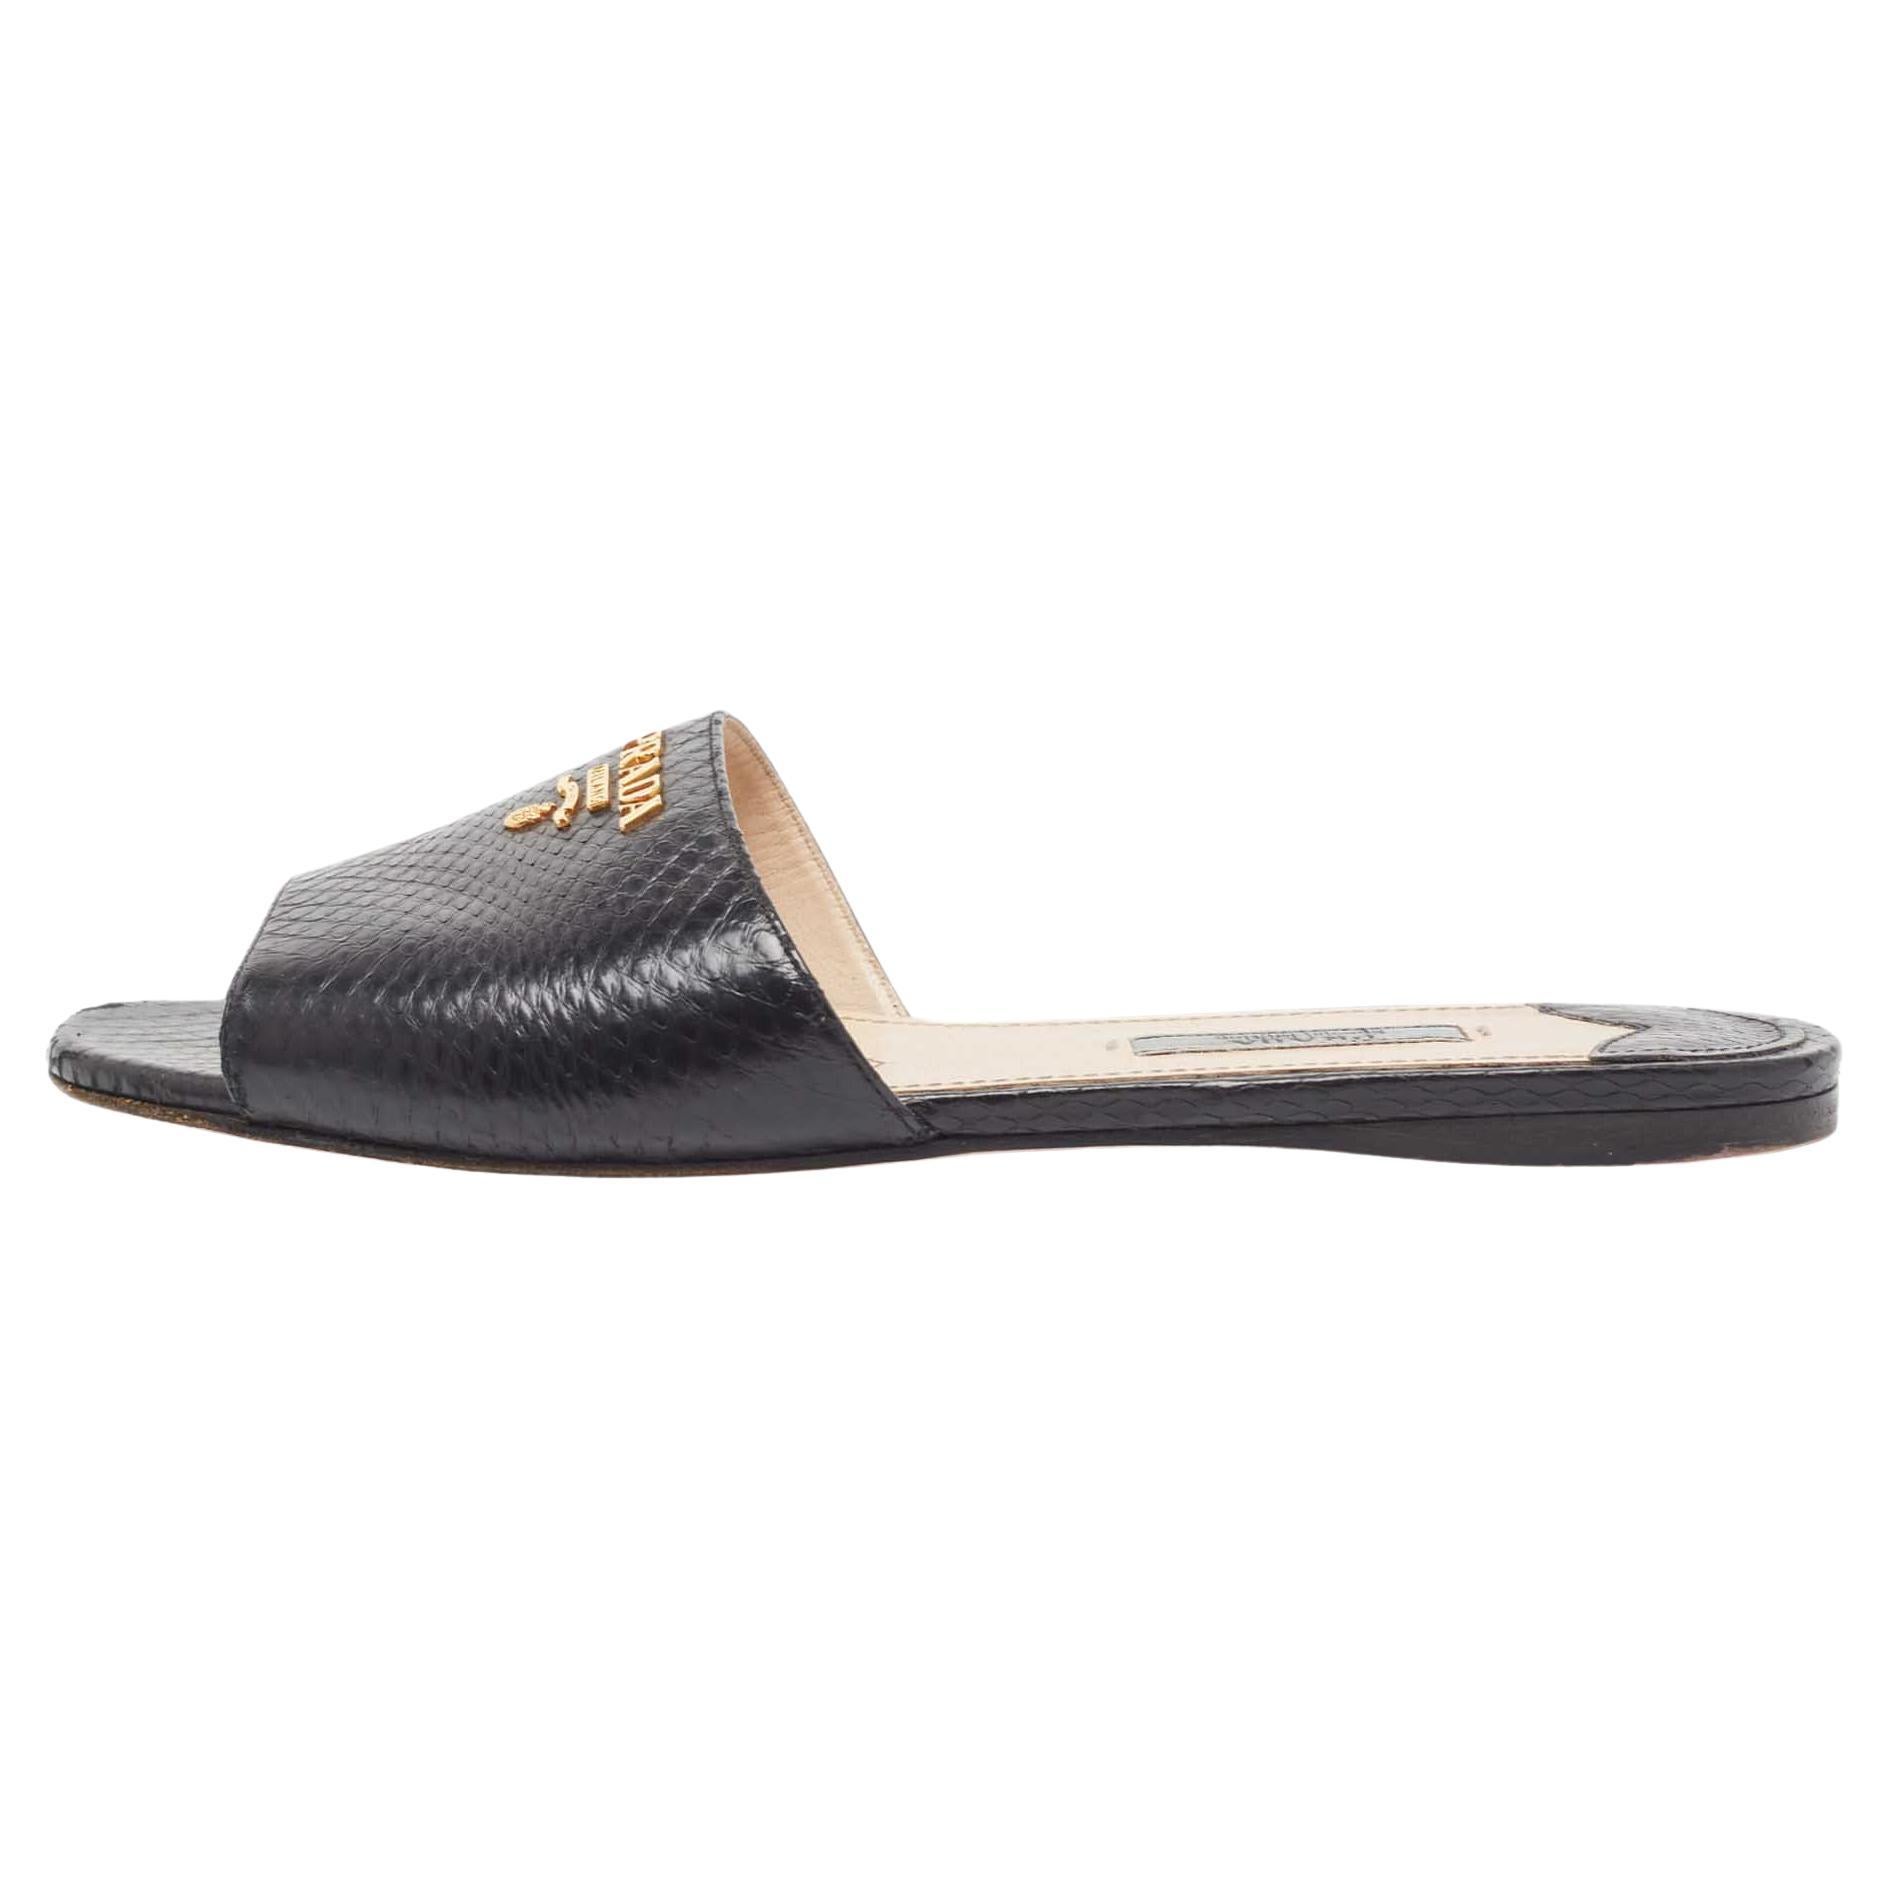 Prada Black Python Embossed Leather Flat Slide Sandals Size 37.5